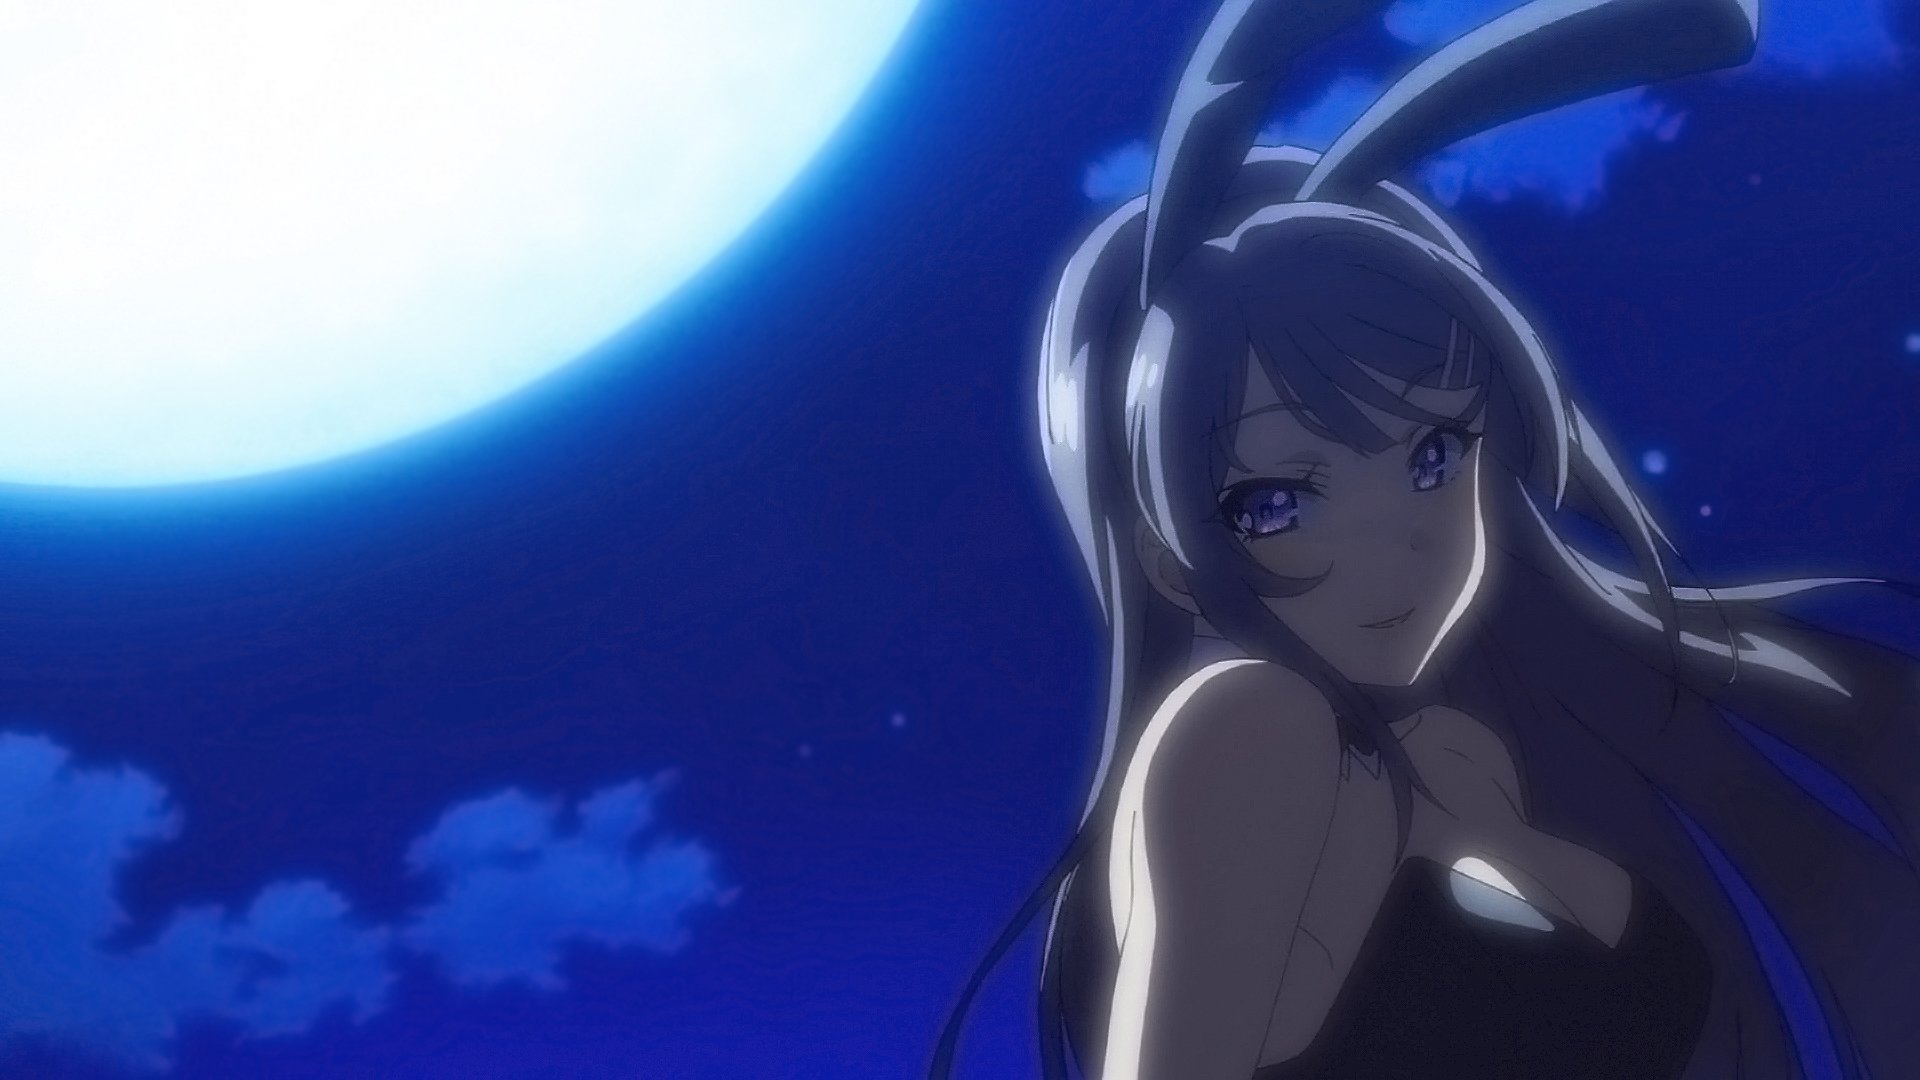 Sakurajima Mai Anime Rascal Does Not Dream of Bunny Girl Senpai Image. 